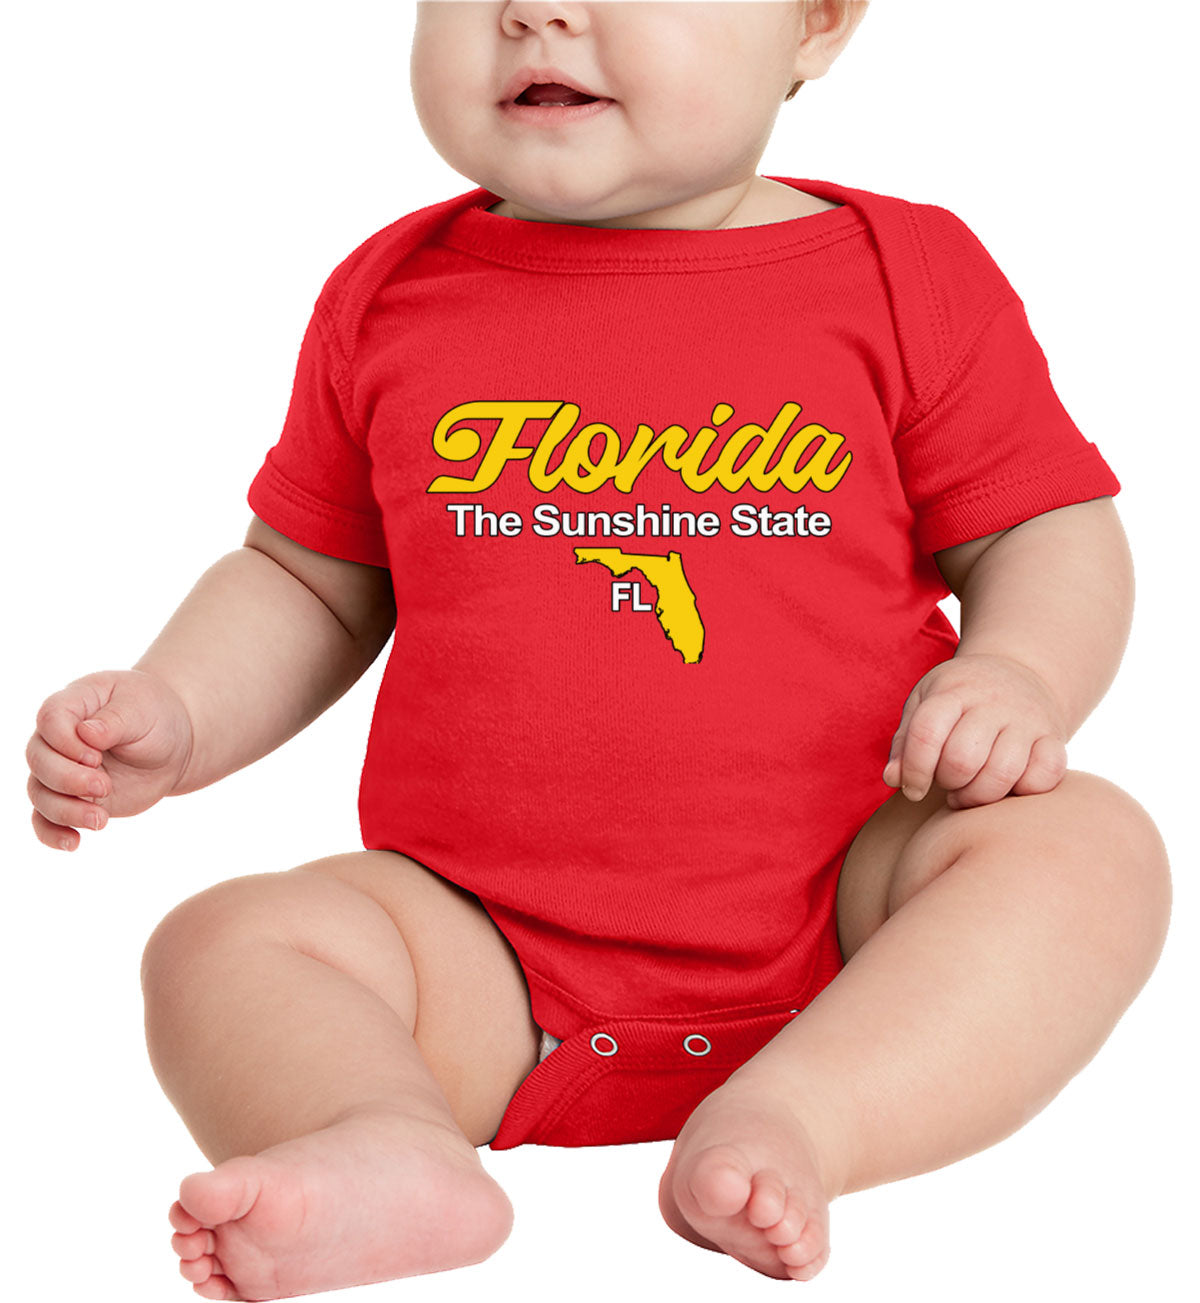 Florida The Sunshine State Baby Onesie